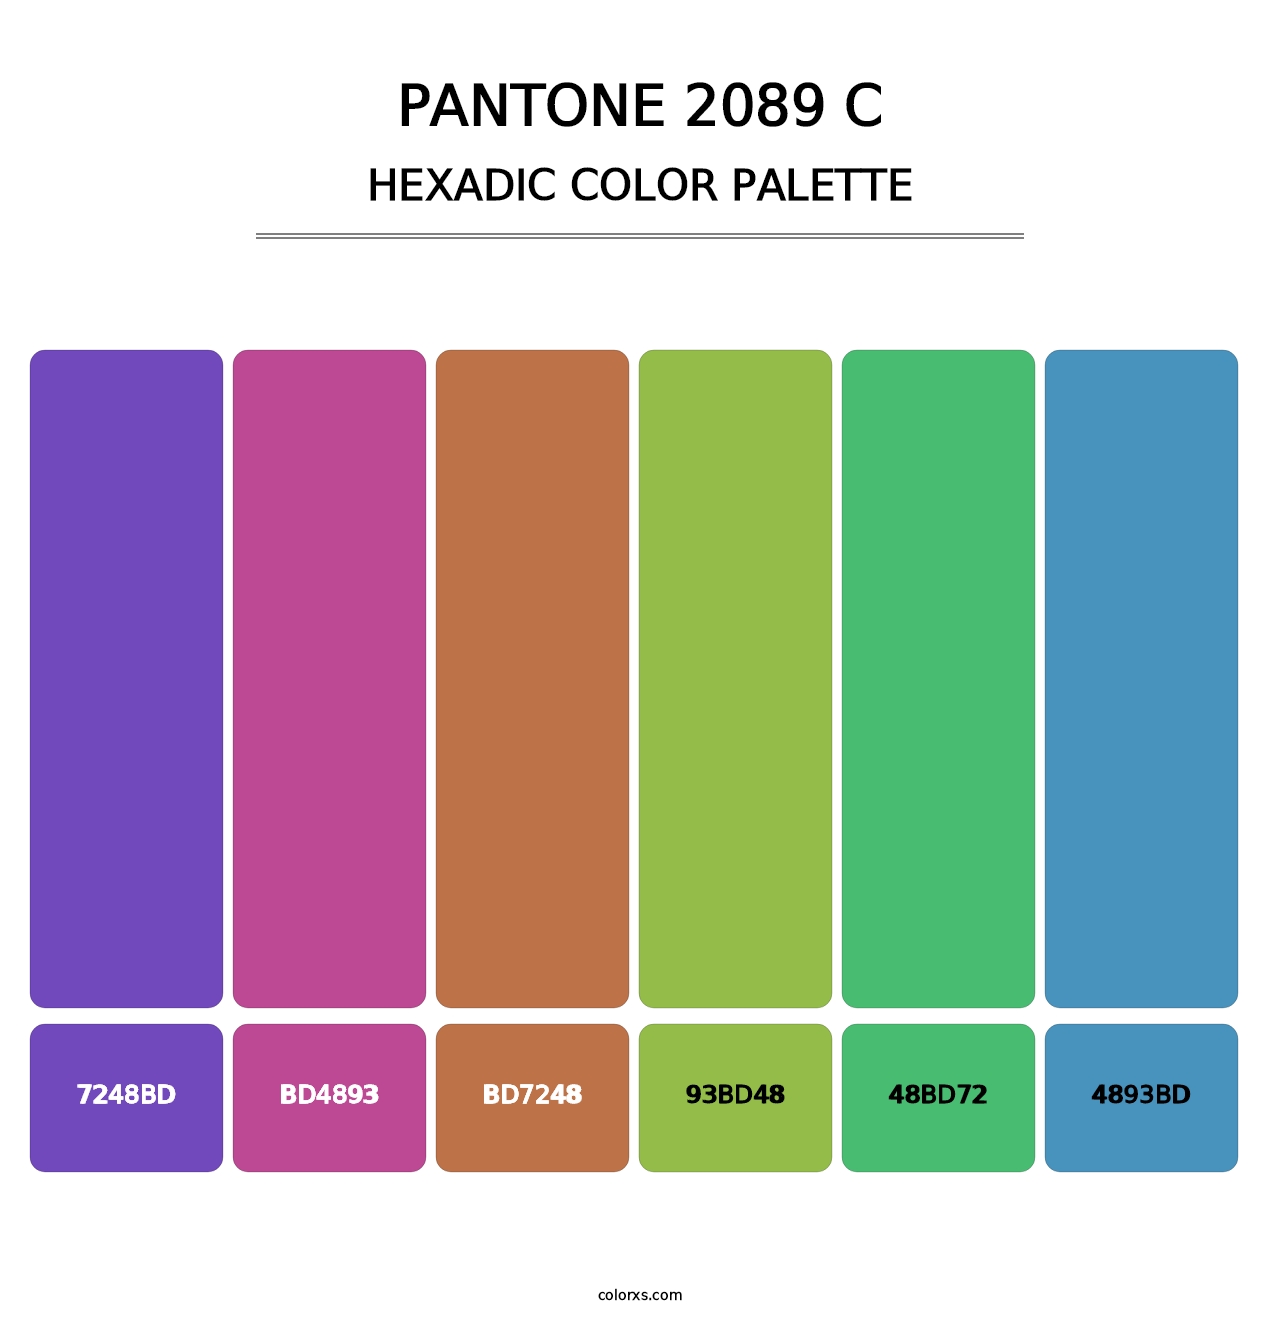 PANTONE 2089 C - Hexadic Color Palette